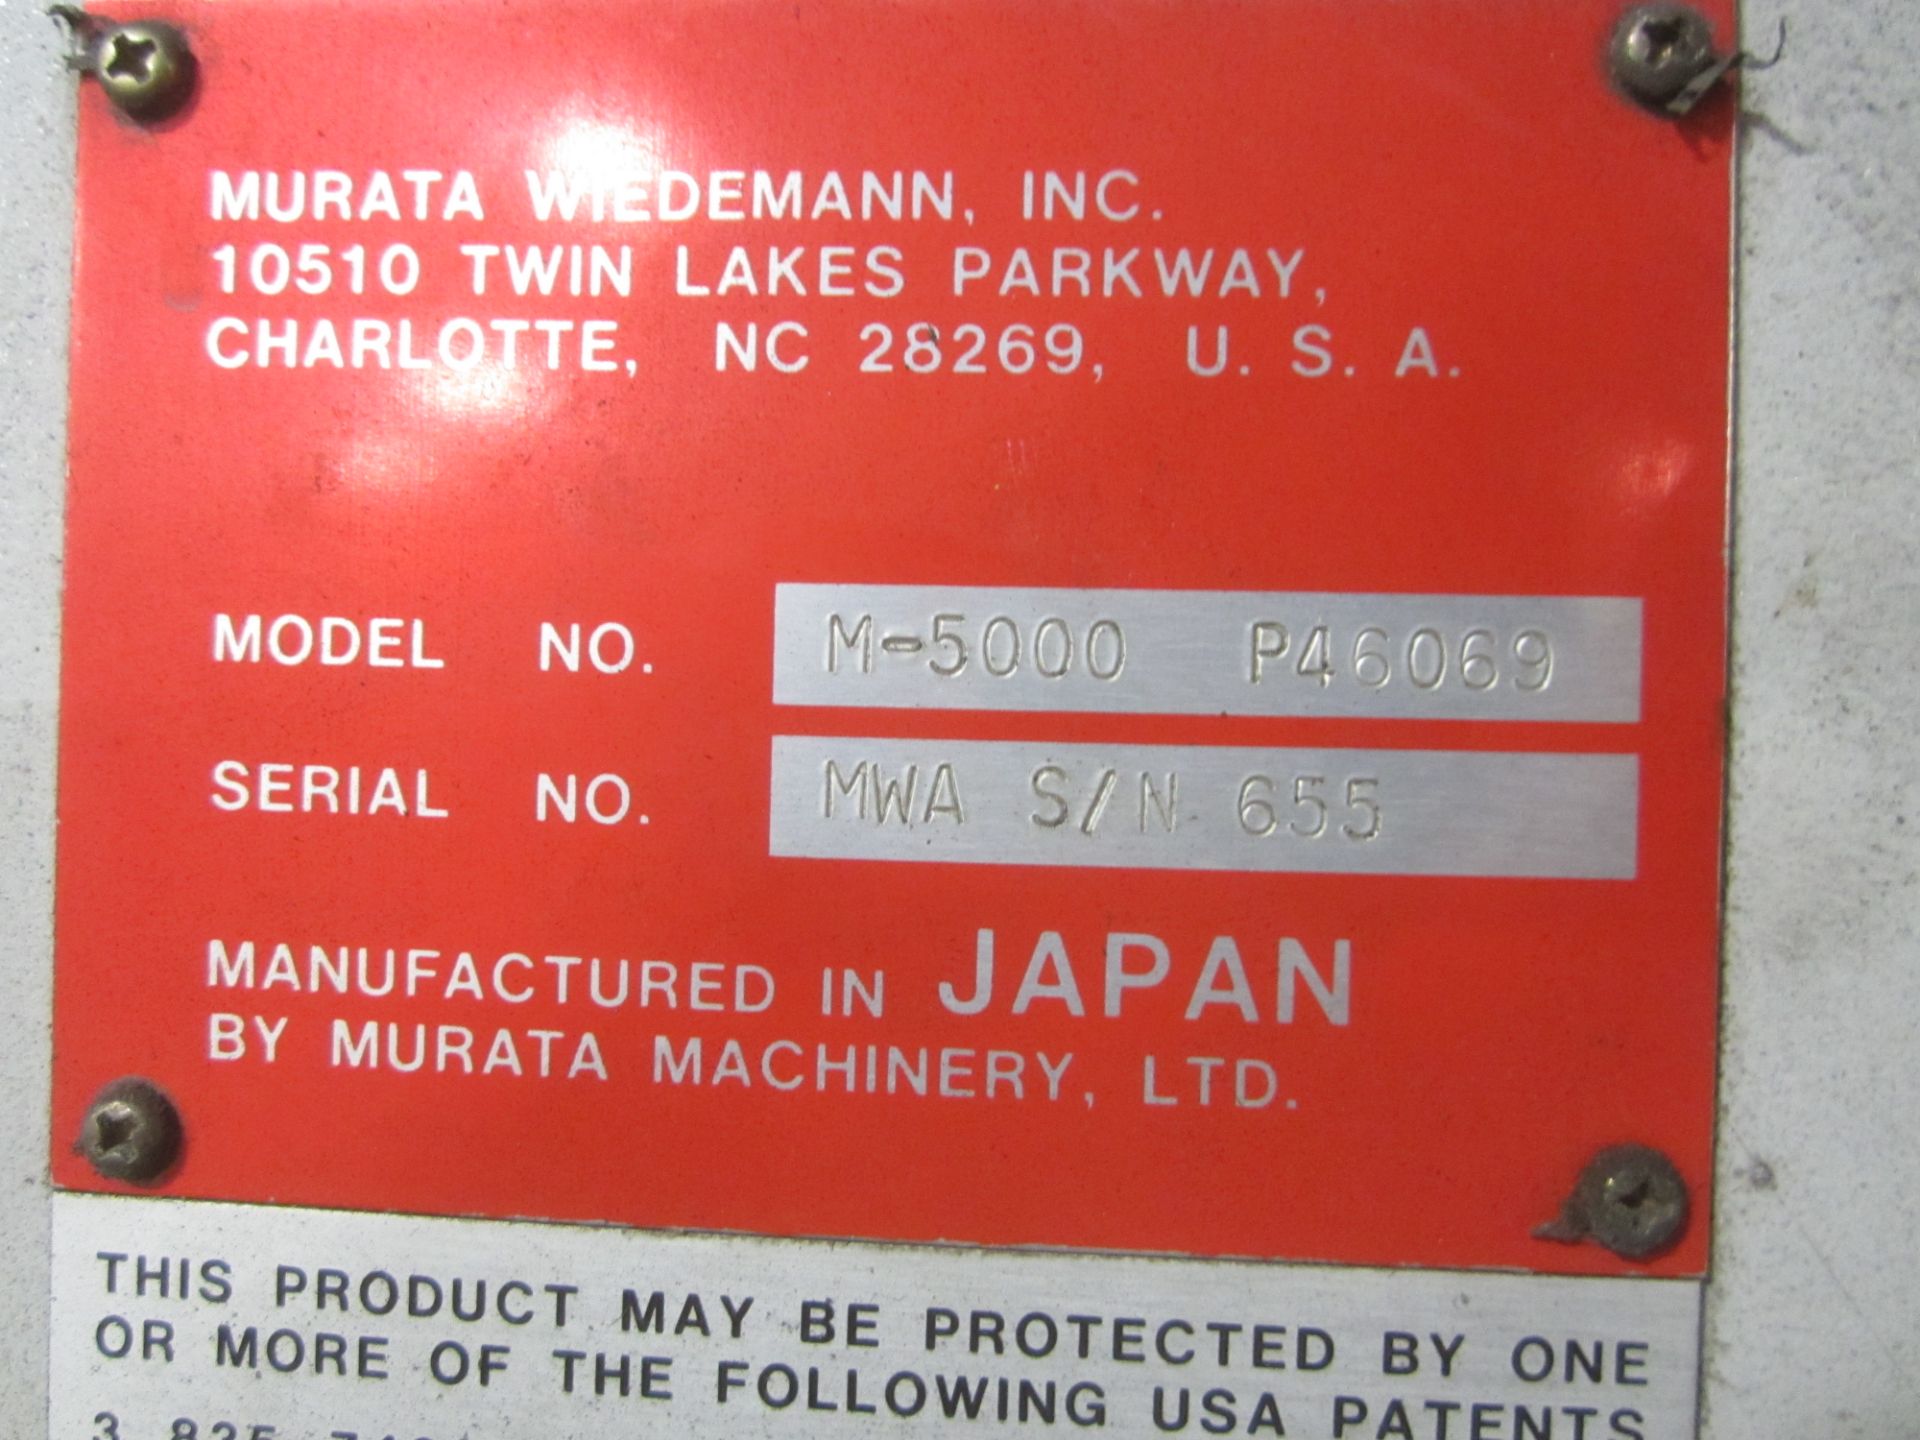 Muratec Model M5000 CNC Turret Punch, s/n 655, Fanuc 16P CNC Control, 45 Ton, 72” X 60” Sheet Size - Image 9 of 9